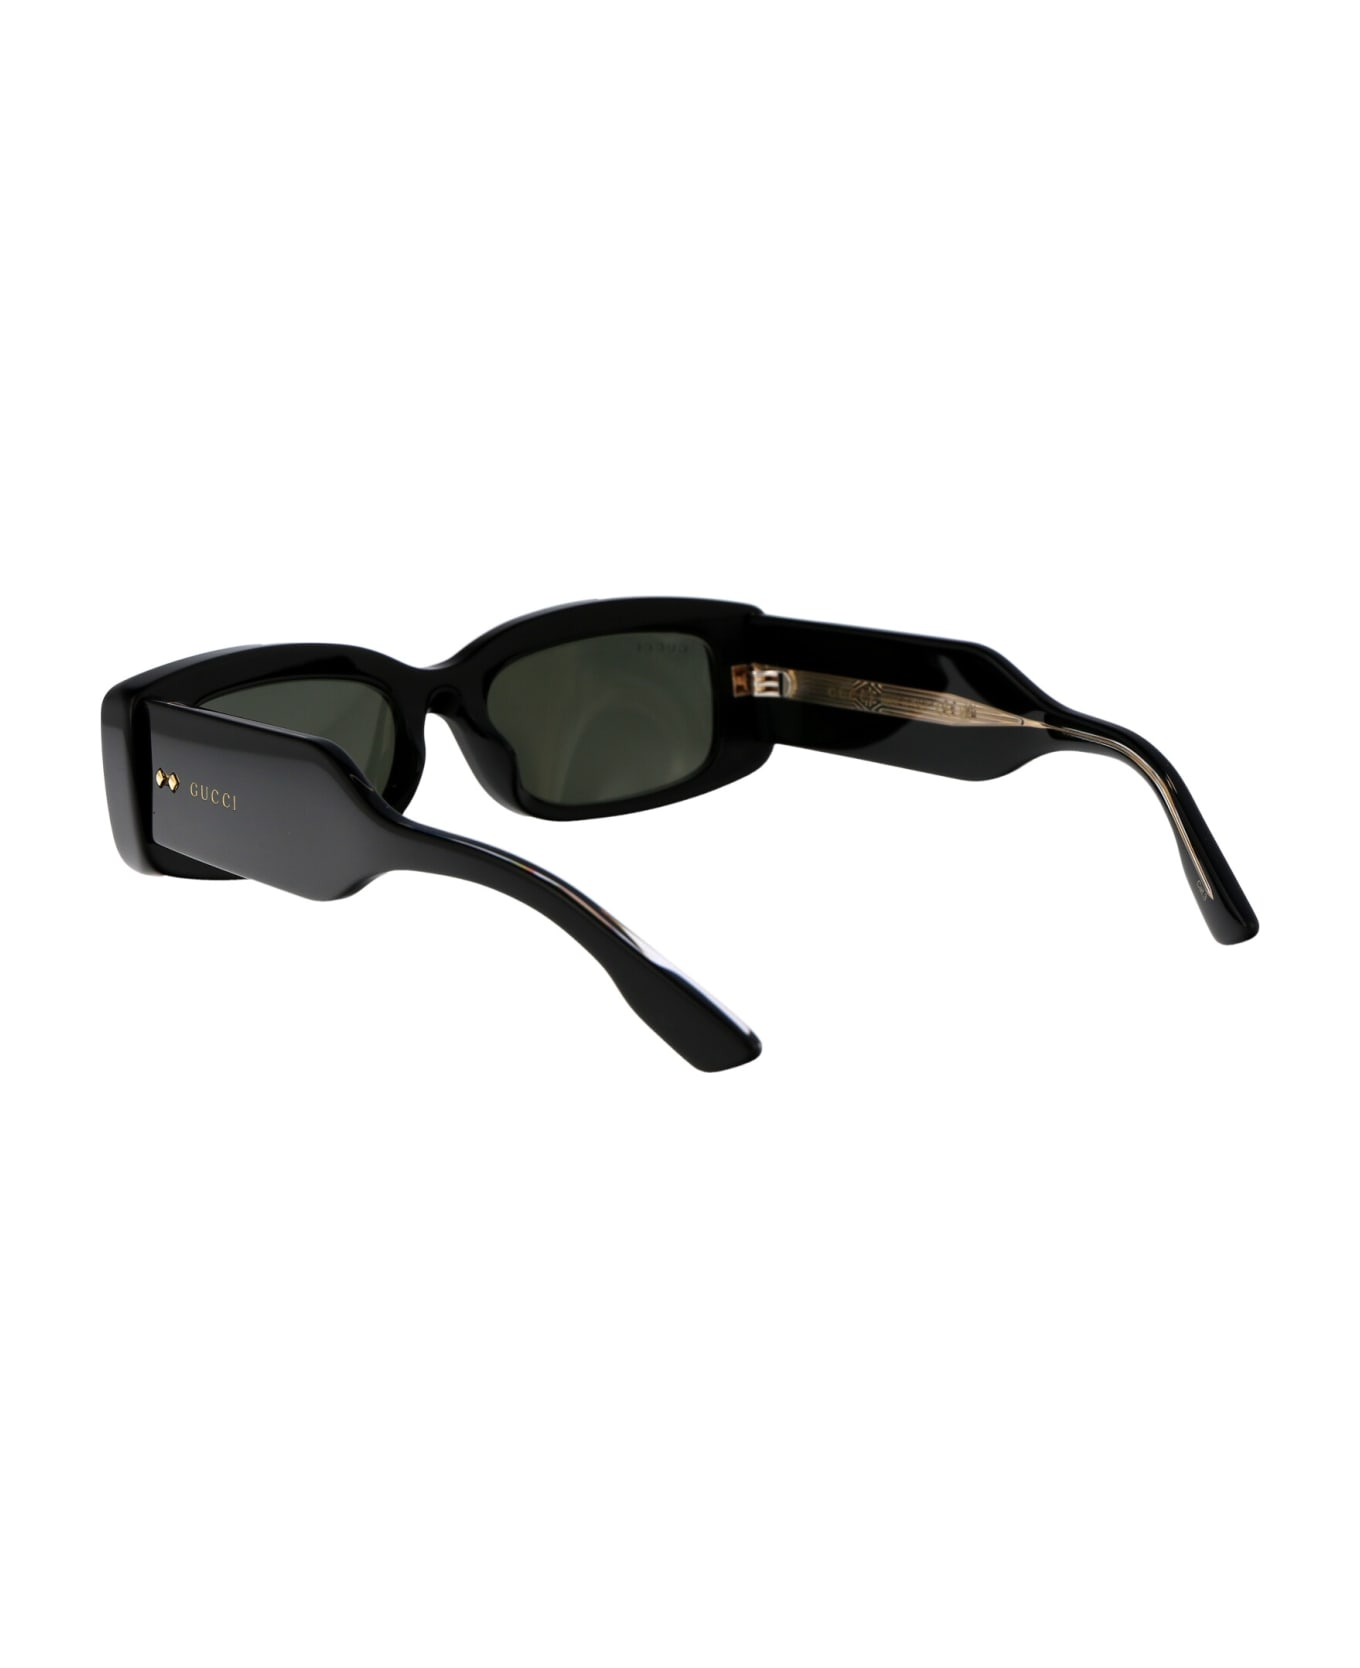 Gucci Eyewear Gg1528s Sunglasses - 001 BLACK BLACK GREY サングラス